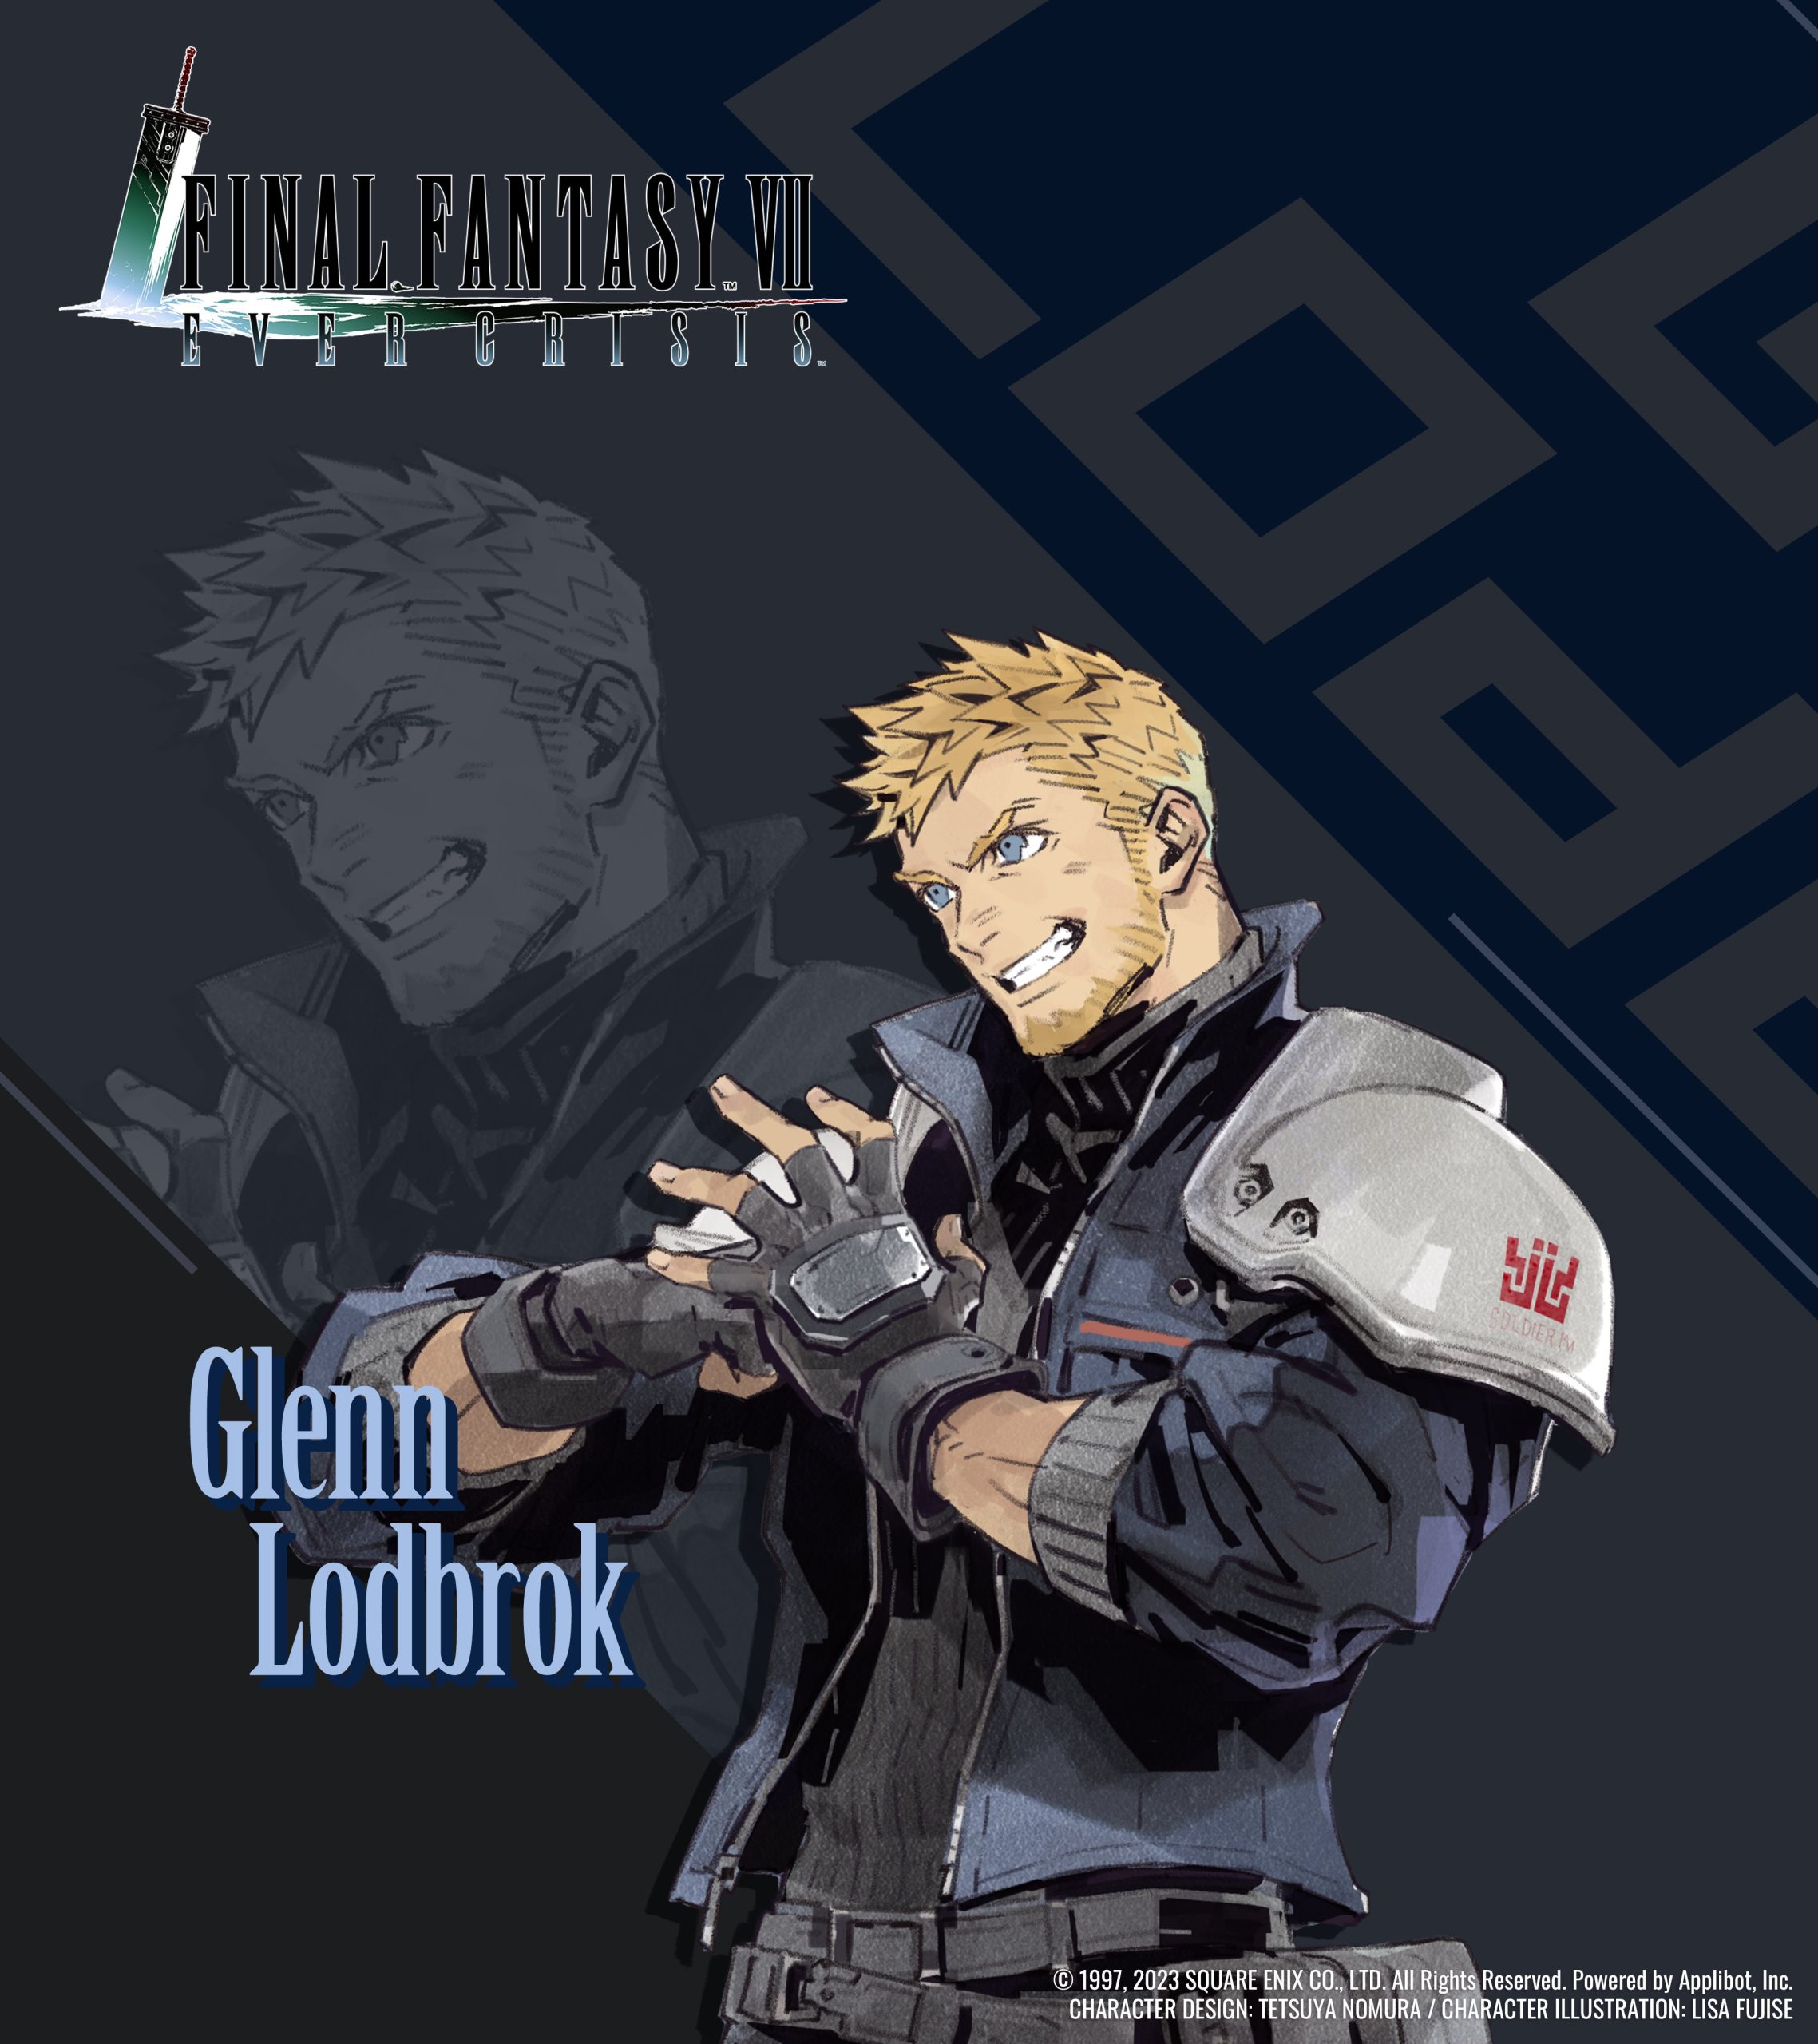 Final Fantasy VII: Ever Crisis Introduces Shinra SOLDIER Glenn Lodbrok